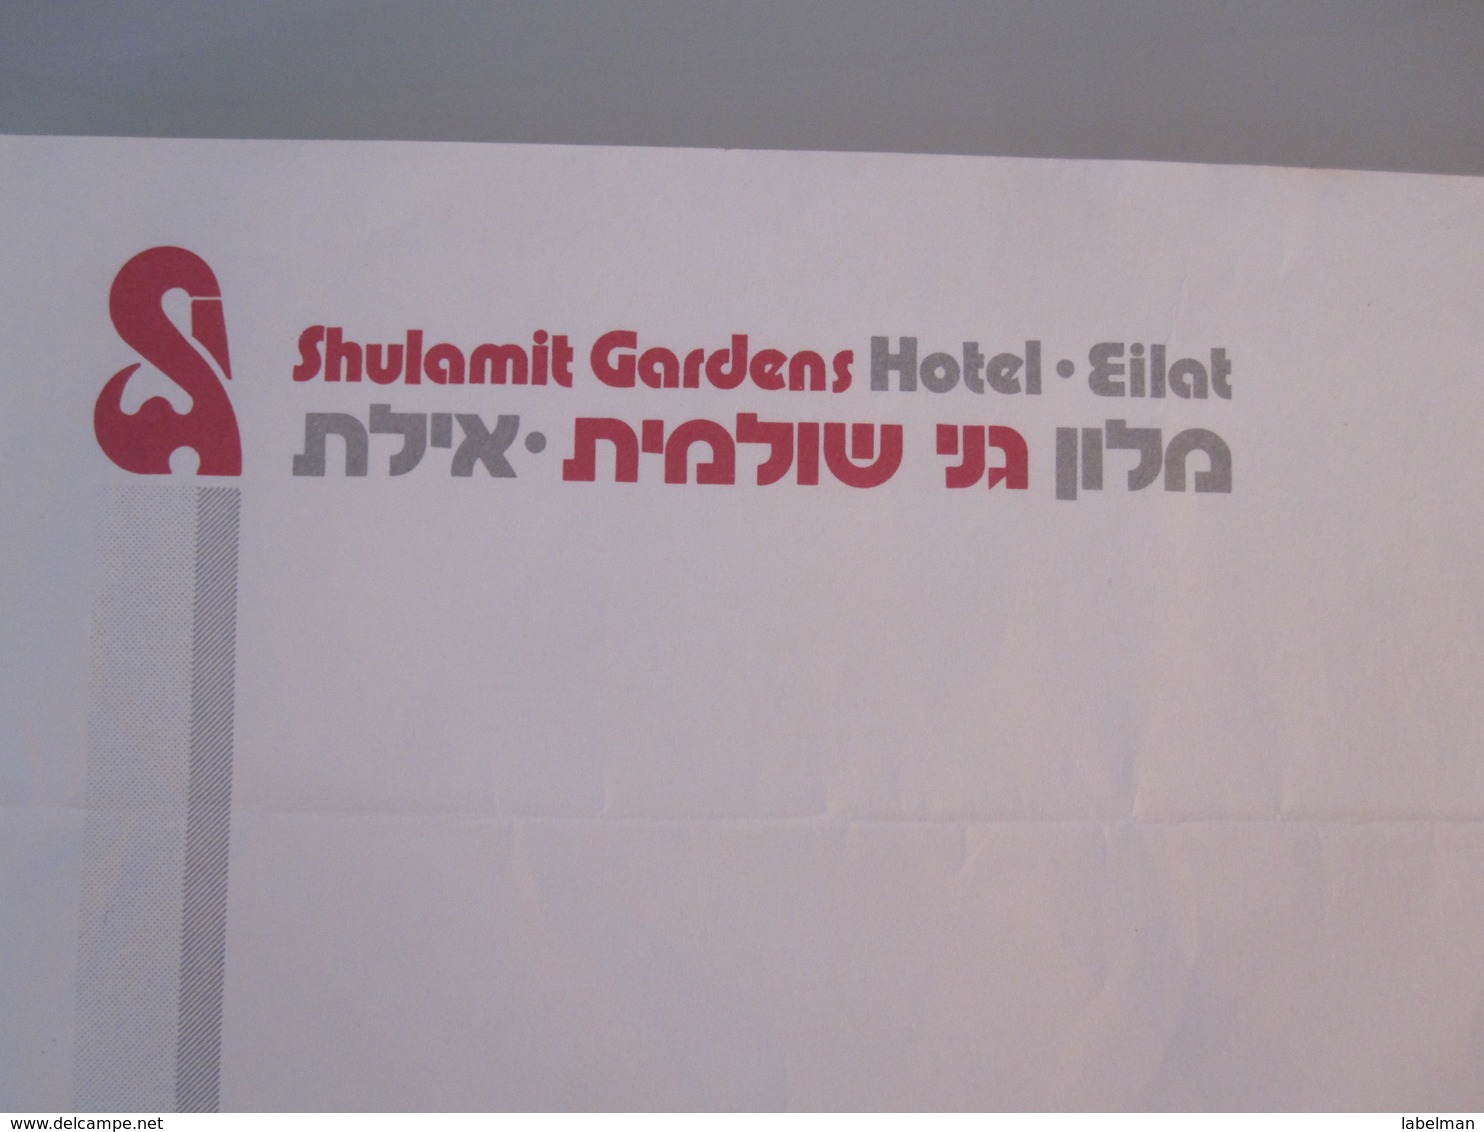 ISRAEL PALESTINE HOTEL HOSTEL GUEST REST HOUSE INN RED SEA EILAT SHULAMIT GARDENS STATIONERY LETTER DESIGN ORIGINAL LOGO - Hotel Labels